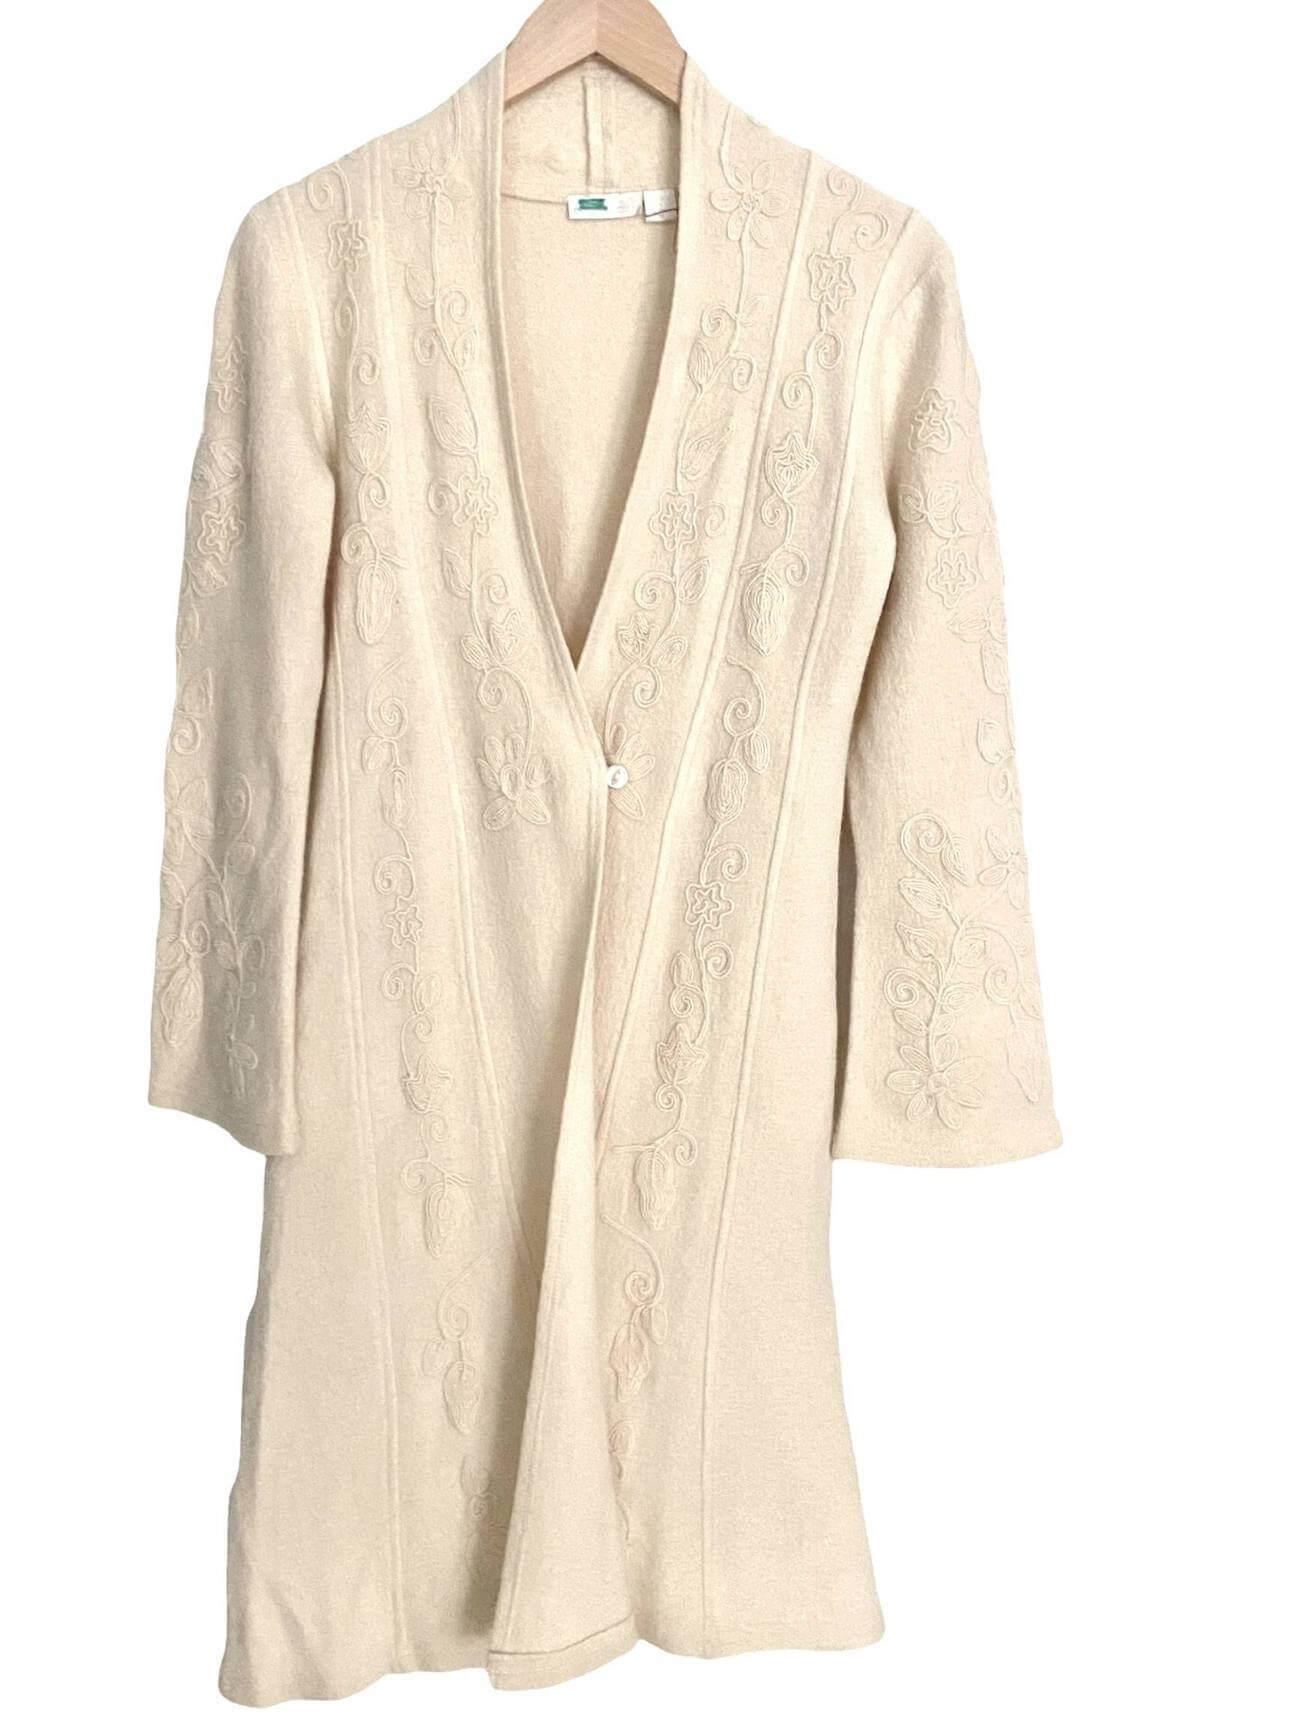 Warm Autumn WHITEWASH ivory crewel embroidered duster coat